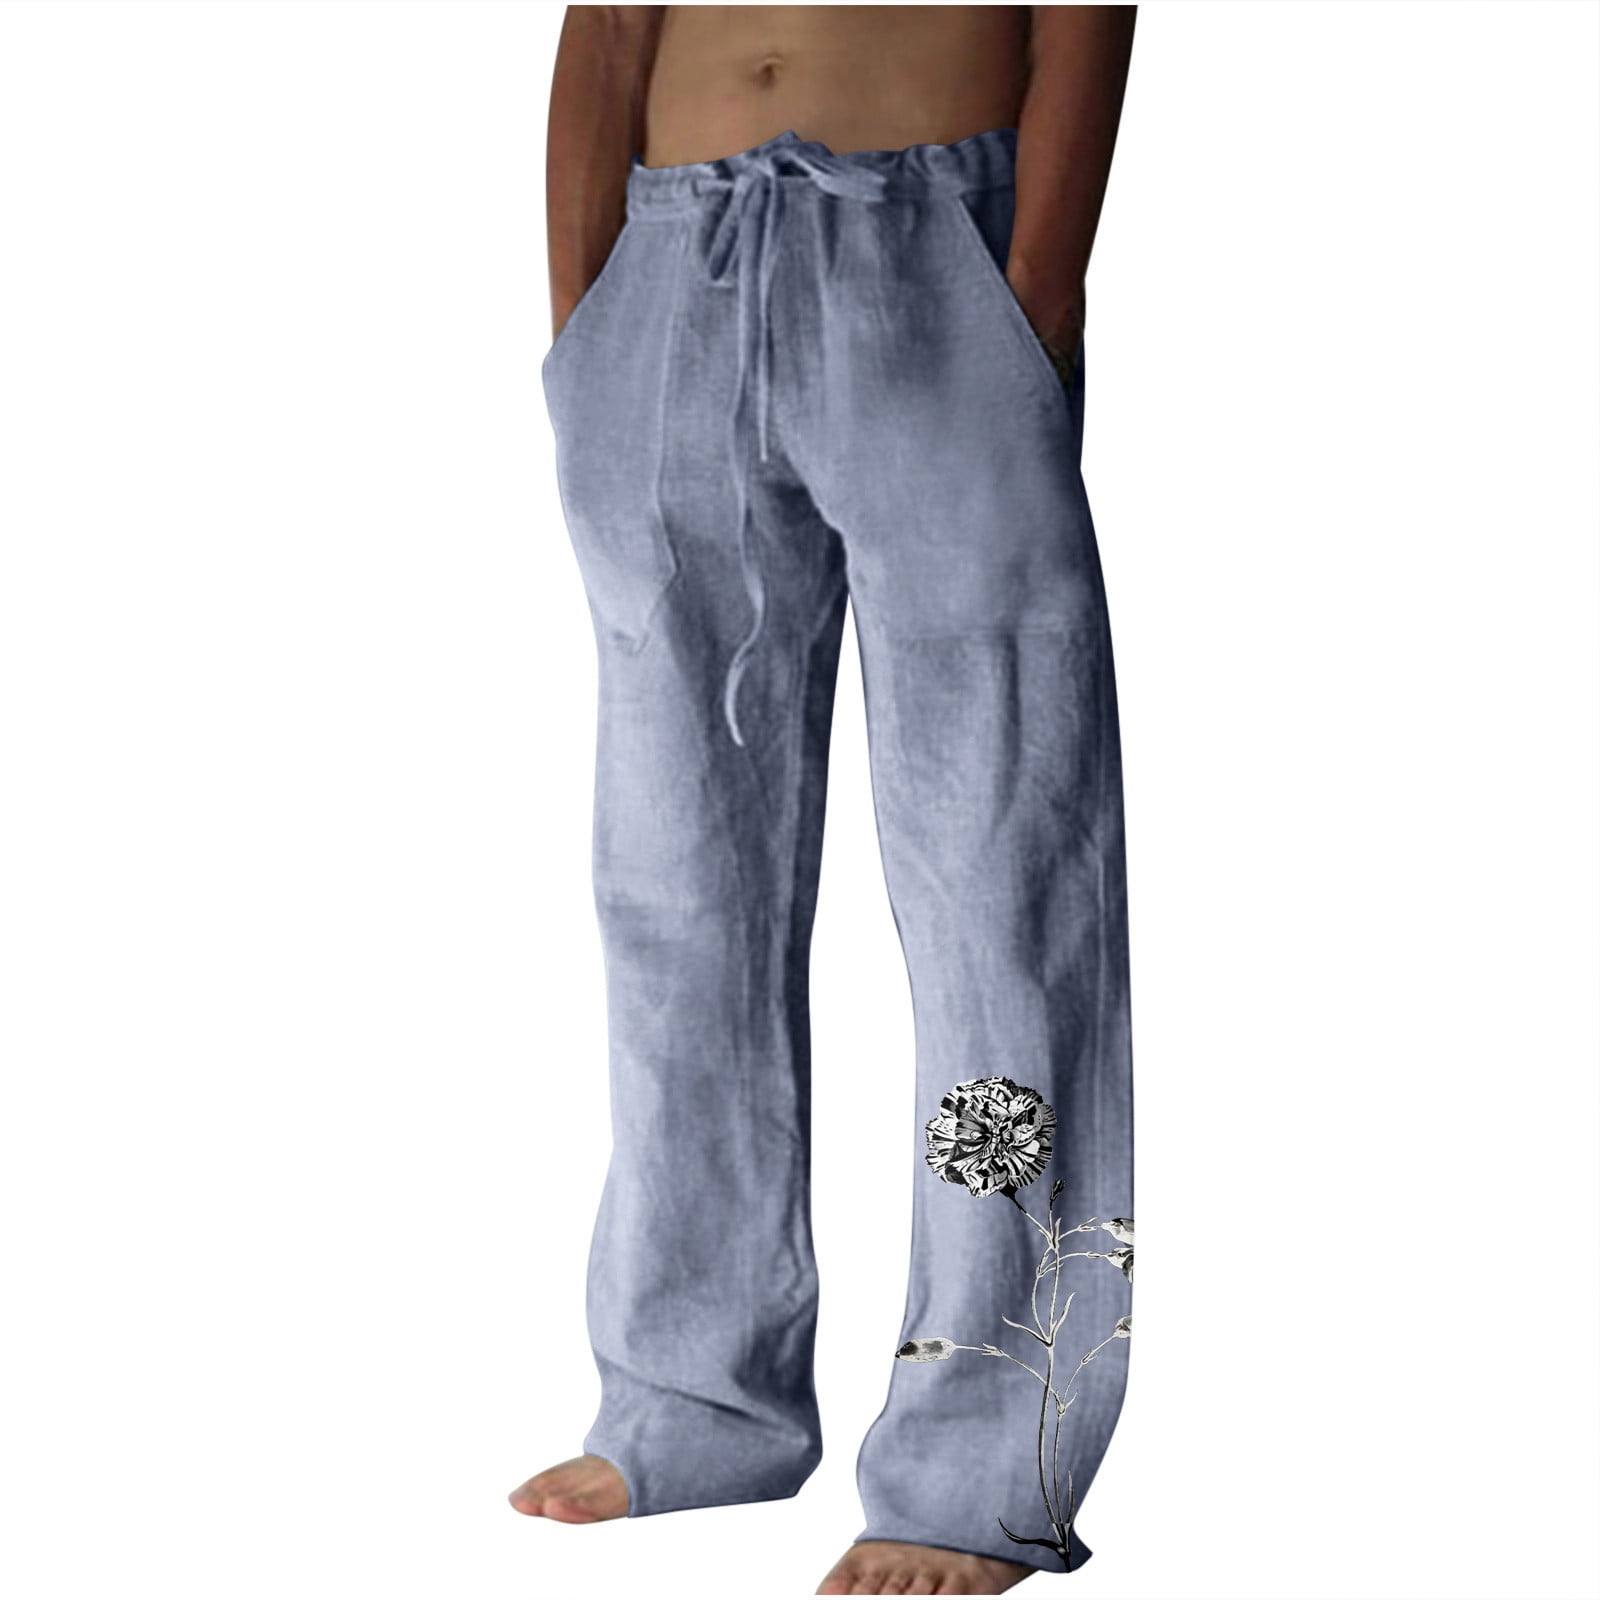 Juakoso Women Pajama Pants Christmas Pattern High Waist Sleepwear Pants  Casual Xmas Lounge Pants